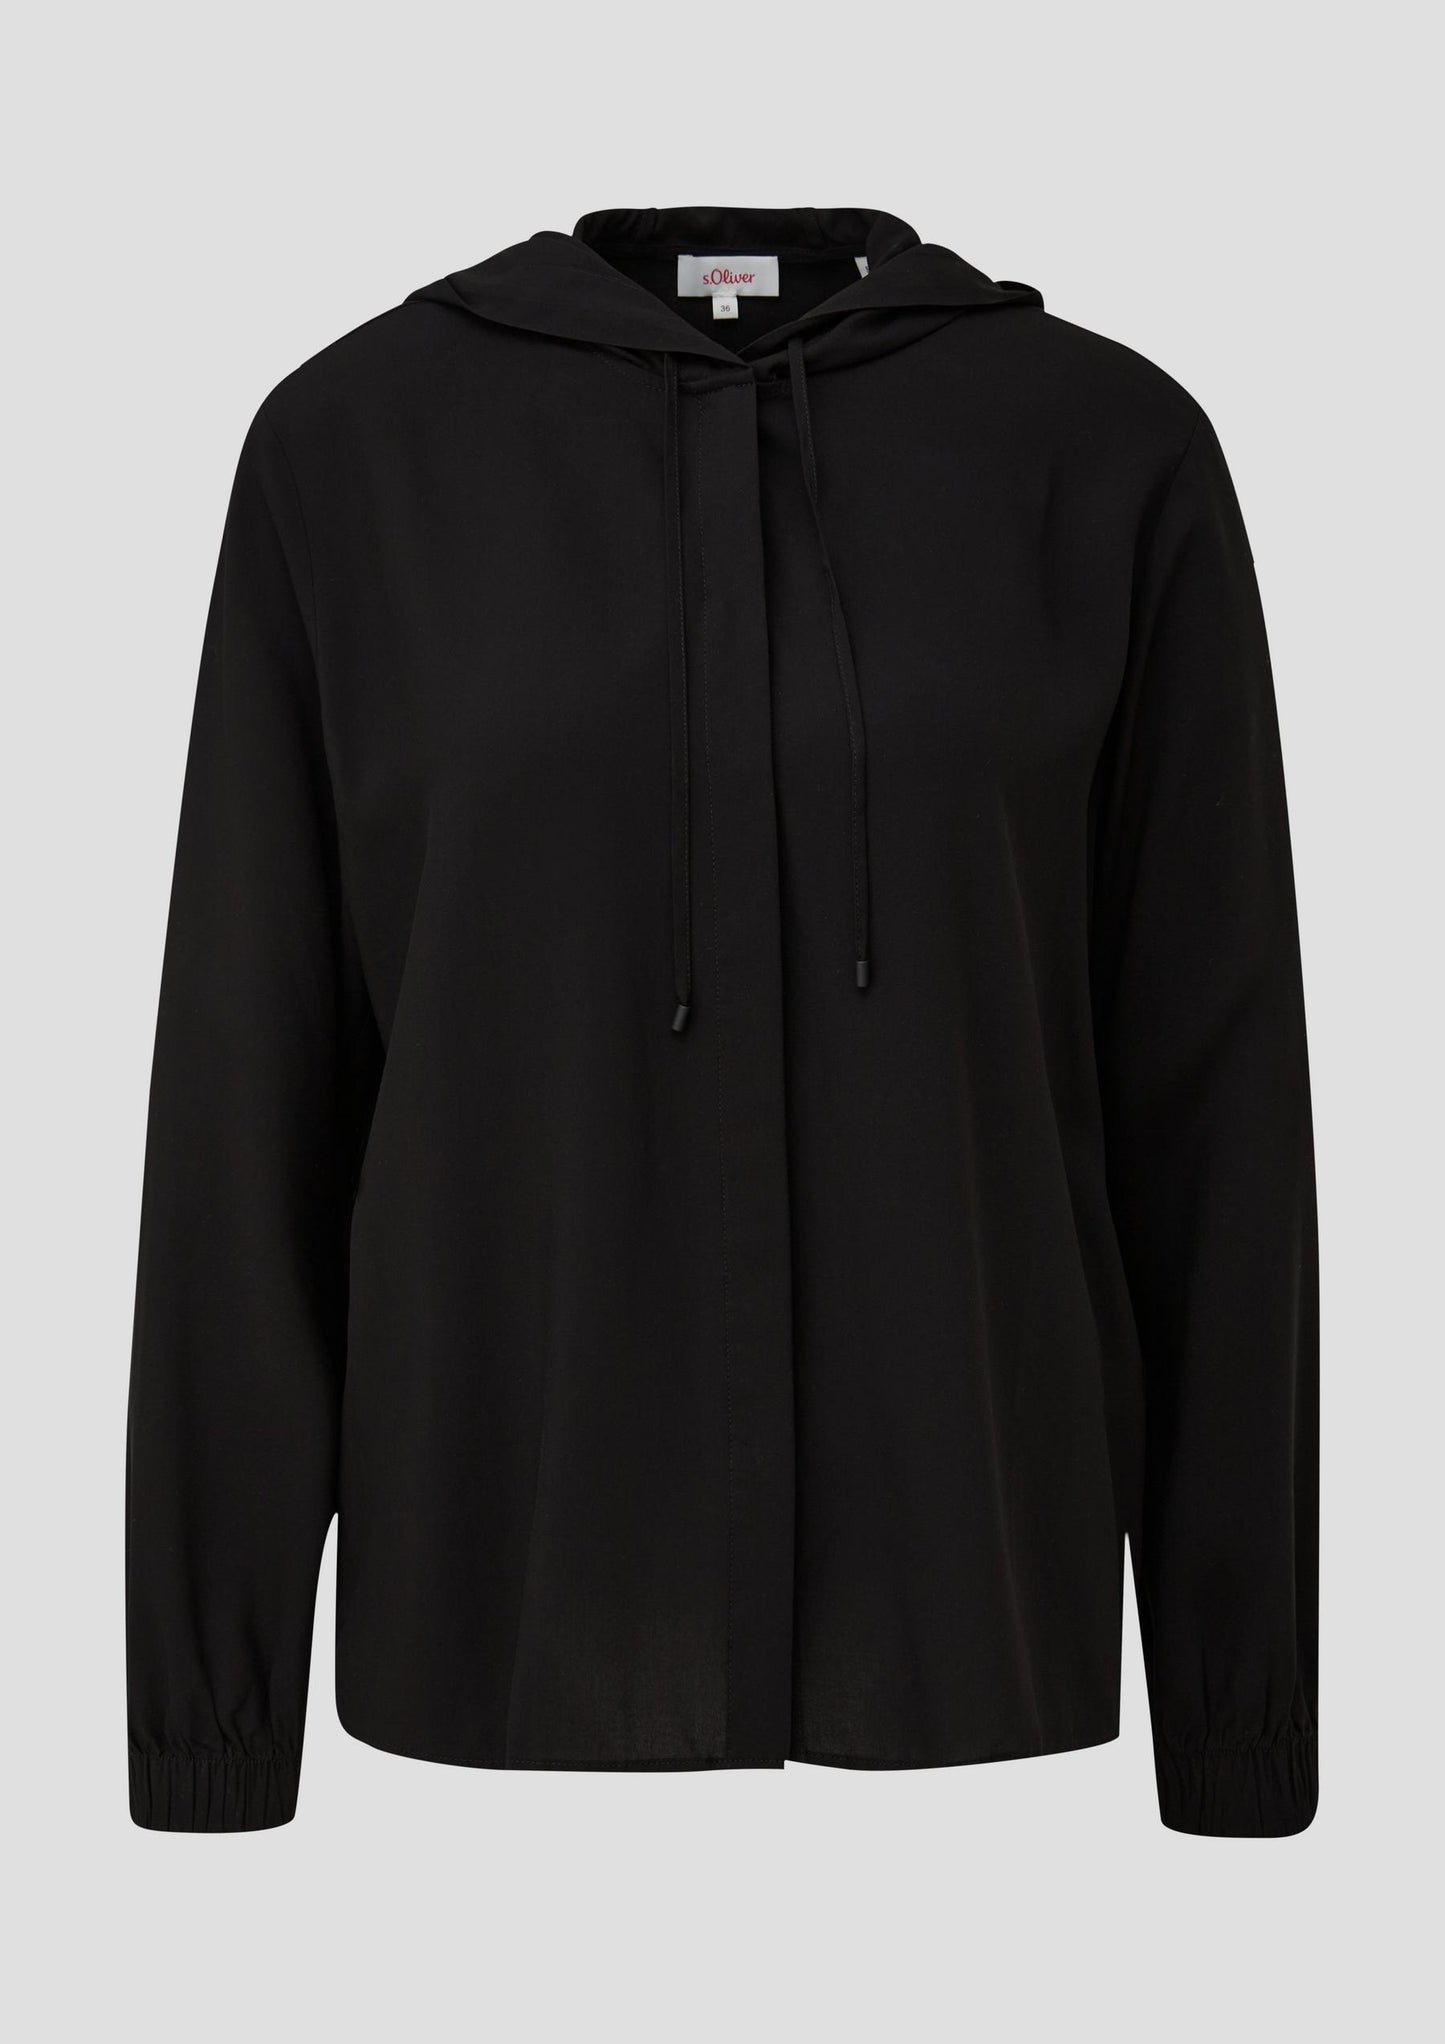 s.Oliver - Viskose Bluse mit Kapuze - Farbe: schwarz